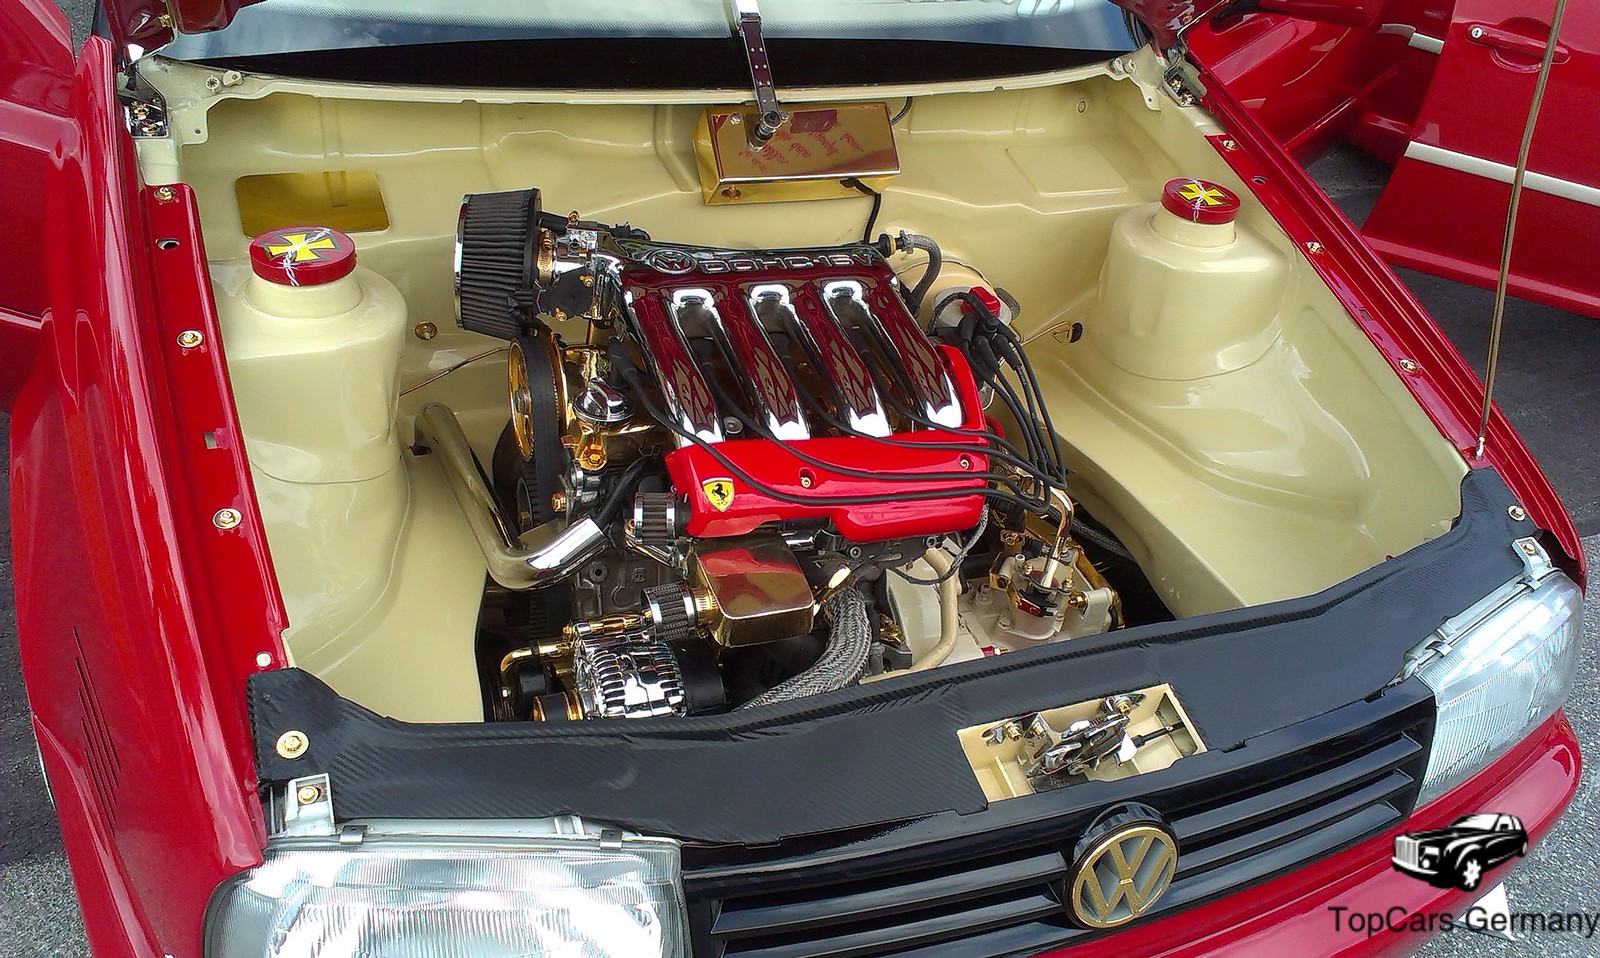 VW Golf 3 GTI Motor Tuning in Ferrari Style, FIND ME ON TWI…